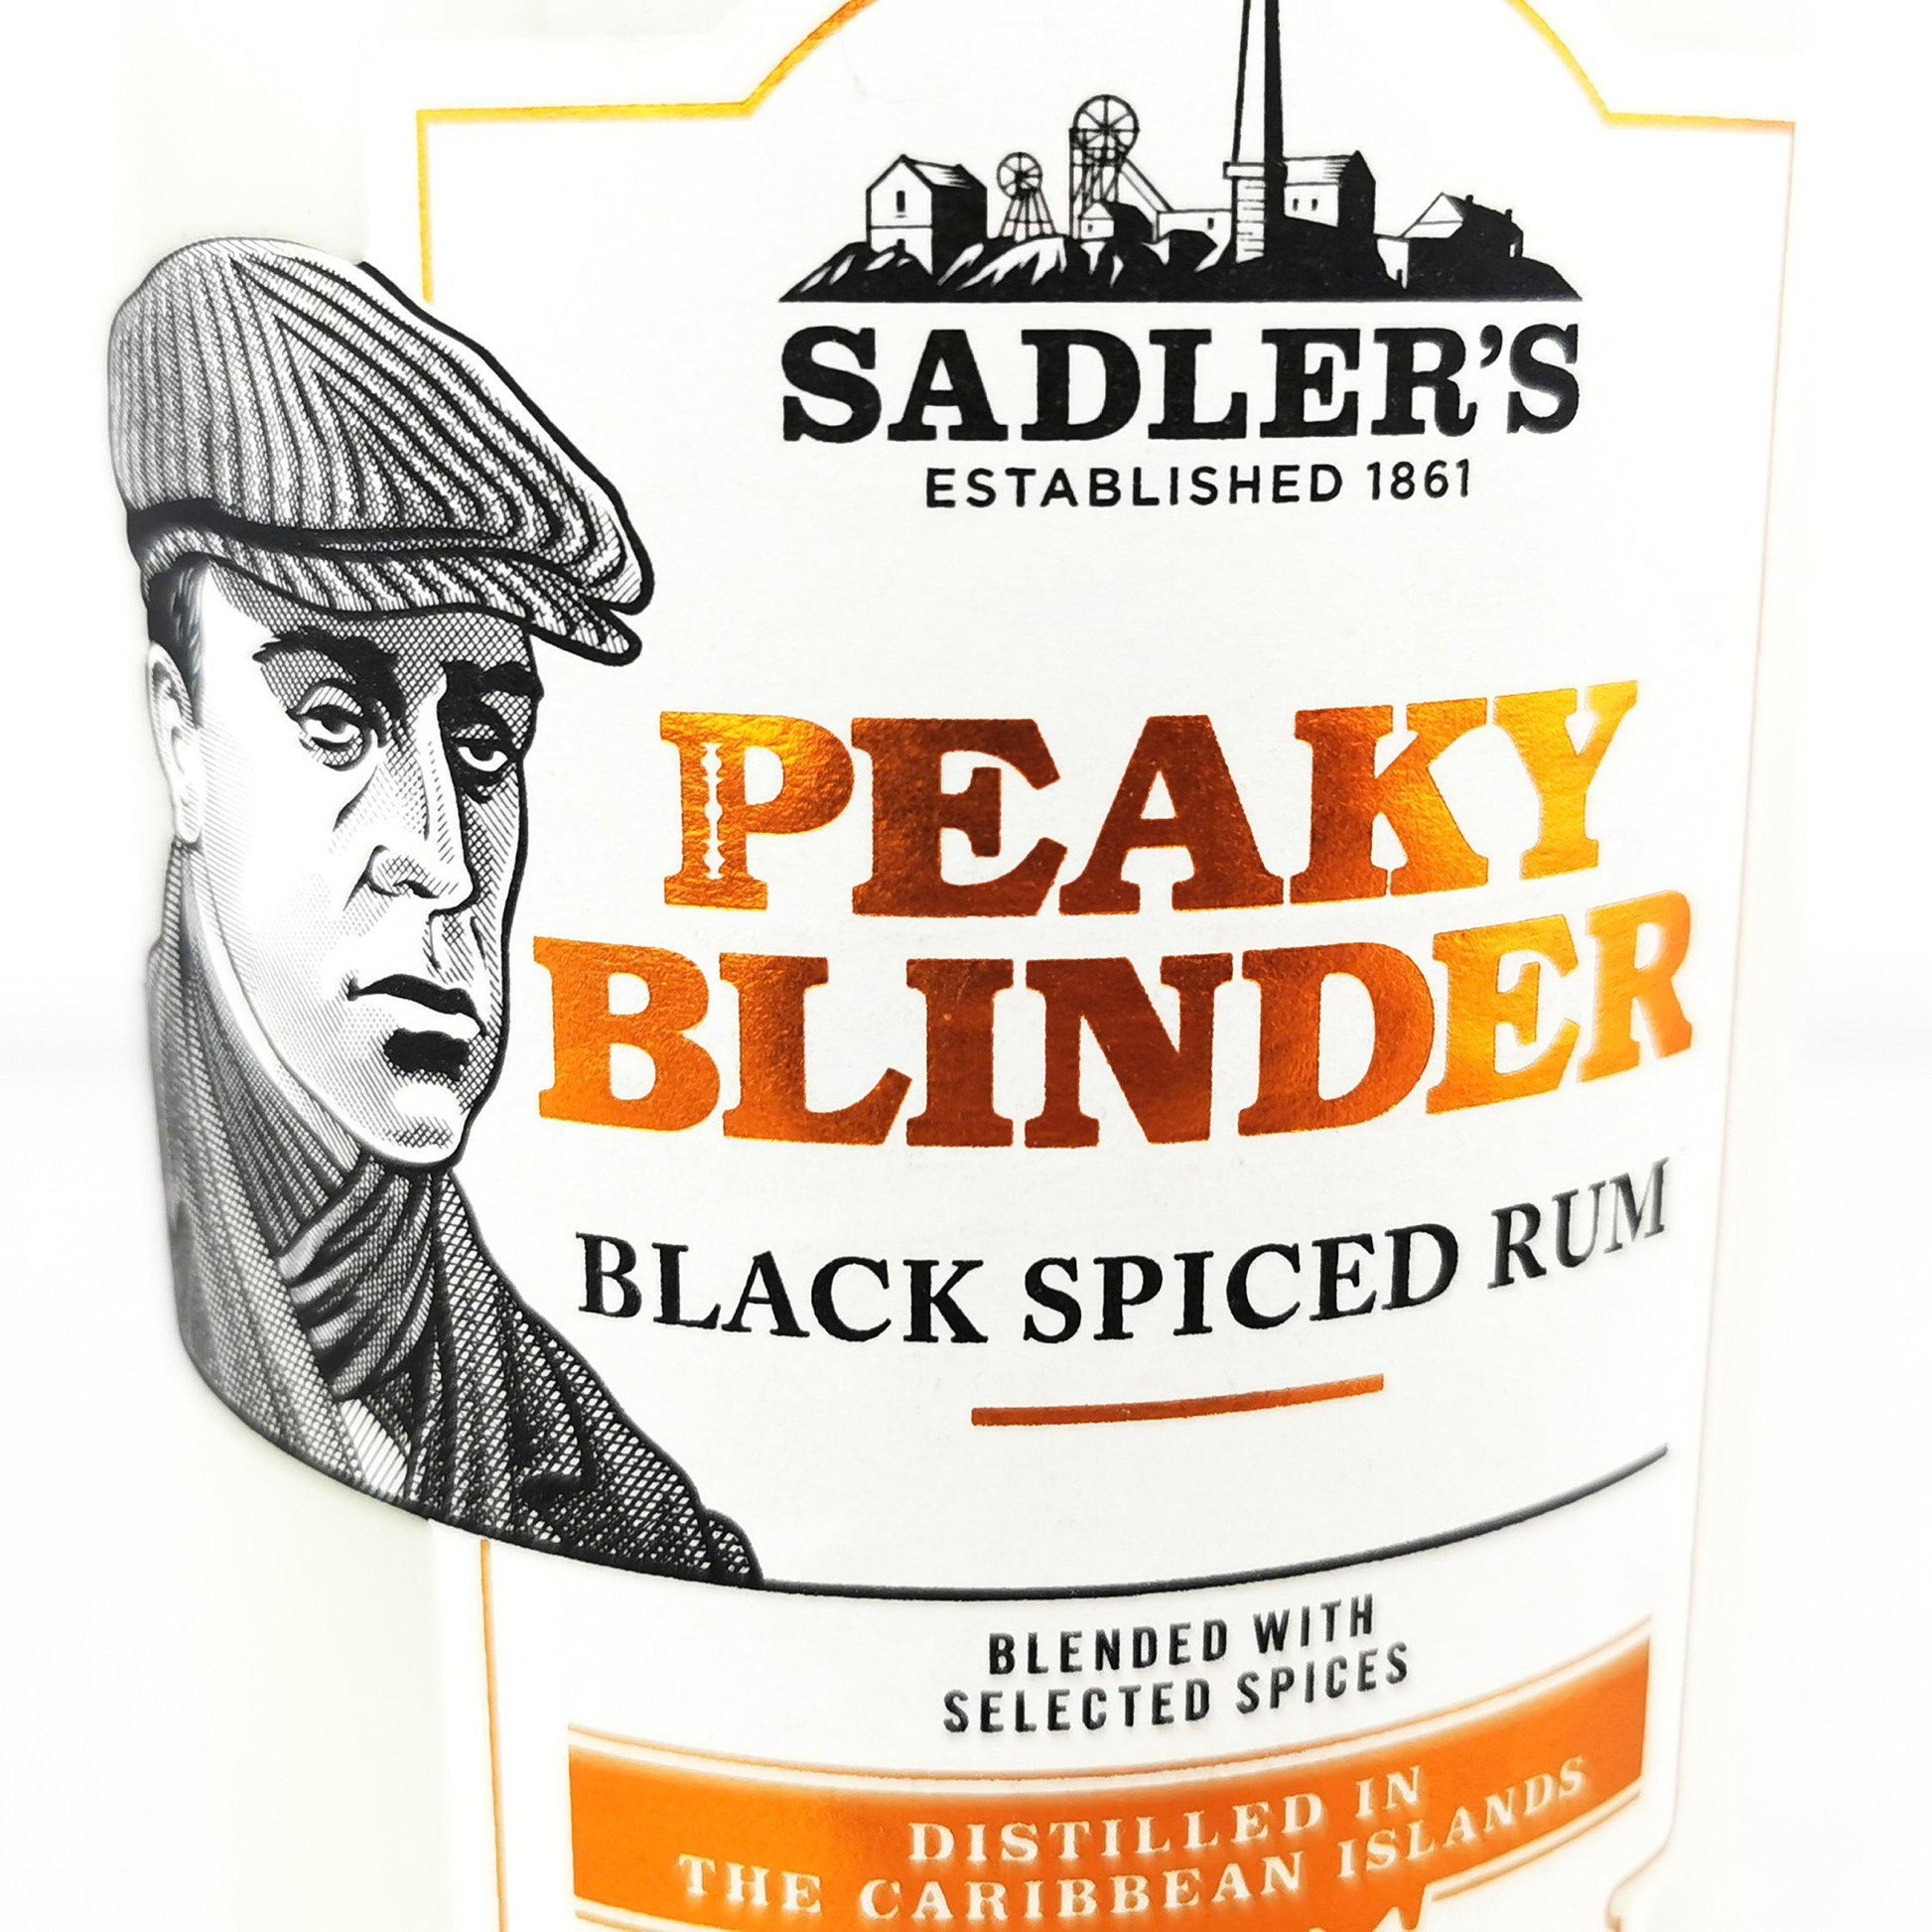 Peaky Blinder Black Spiced Rum Bottle Candle Rum Bottle Candles Adhock Homeware